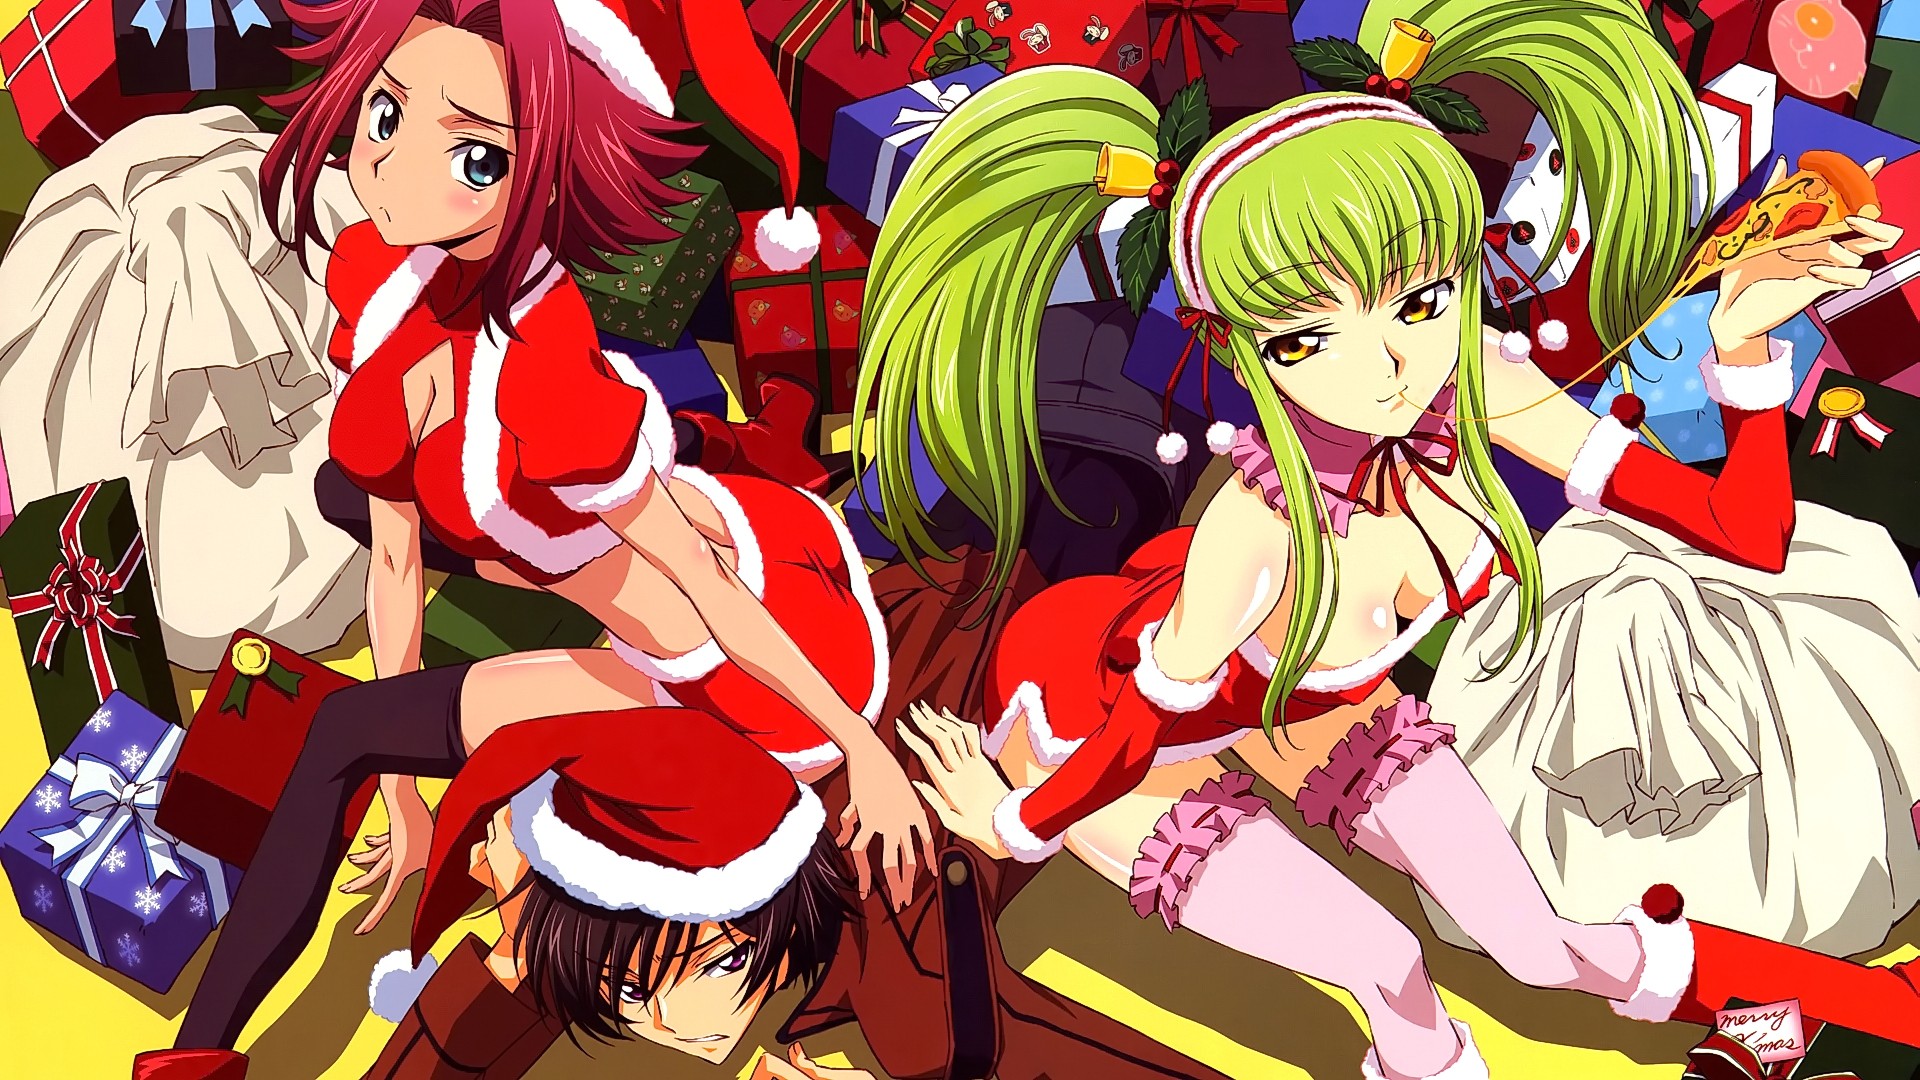 Anime 1920x1080 anime anime girls Kallen Stadtfeld C.C. (Code Geass) Code Geass Christmas Lelouch vi Britannia two women green hair redhead Santa hats Christmas presents presents food pizza bright